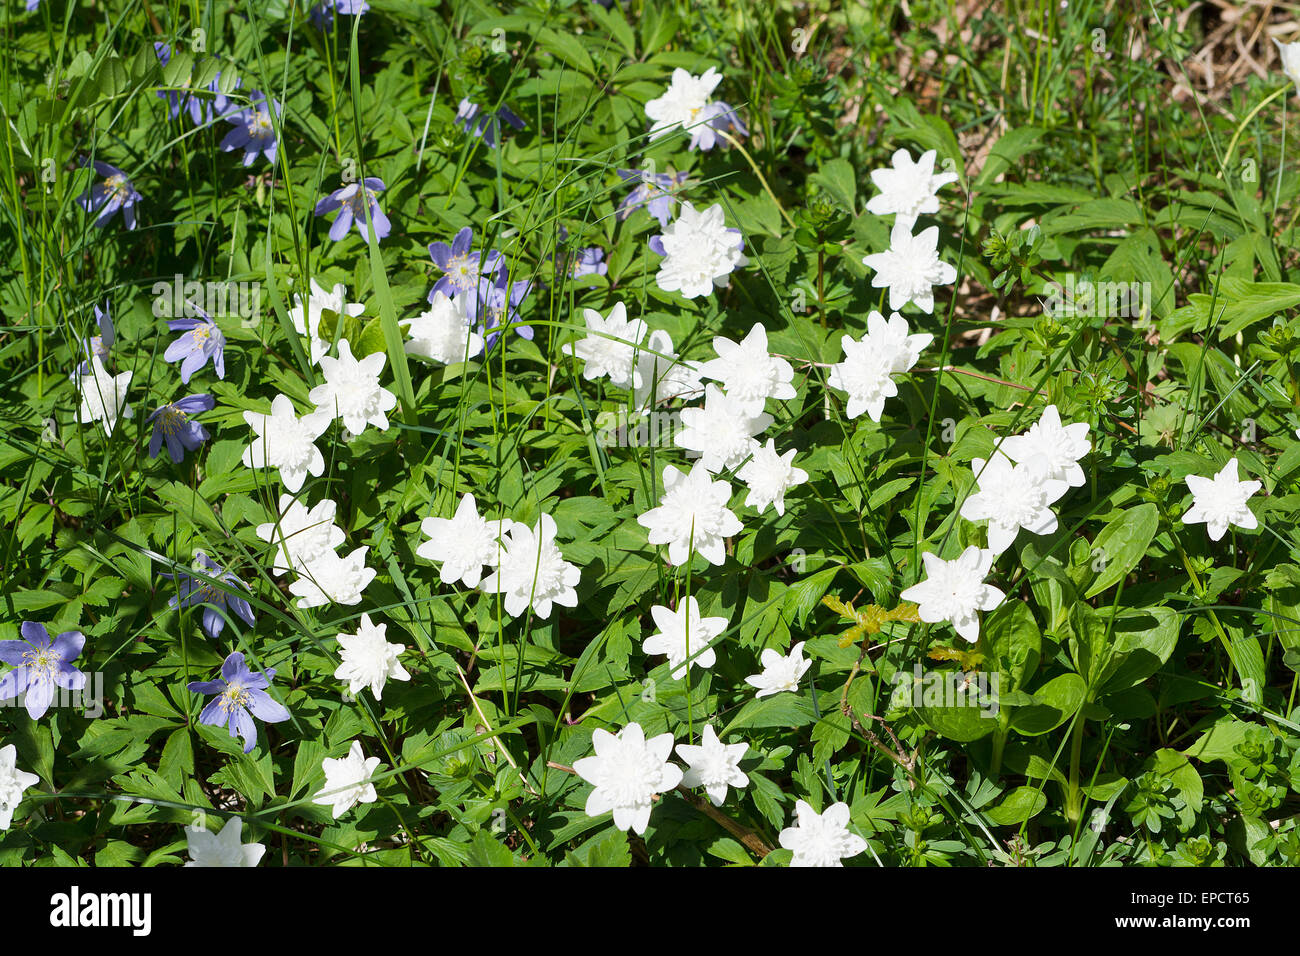 White Wood anemone flowers (Anemone nemorosa) closeup with green leaves. Stock Photo